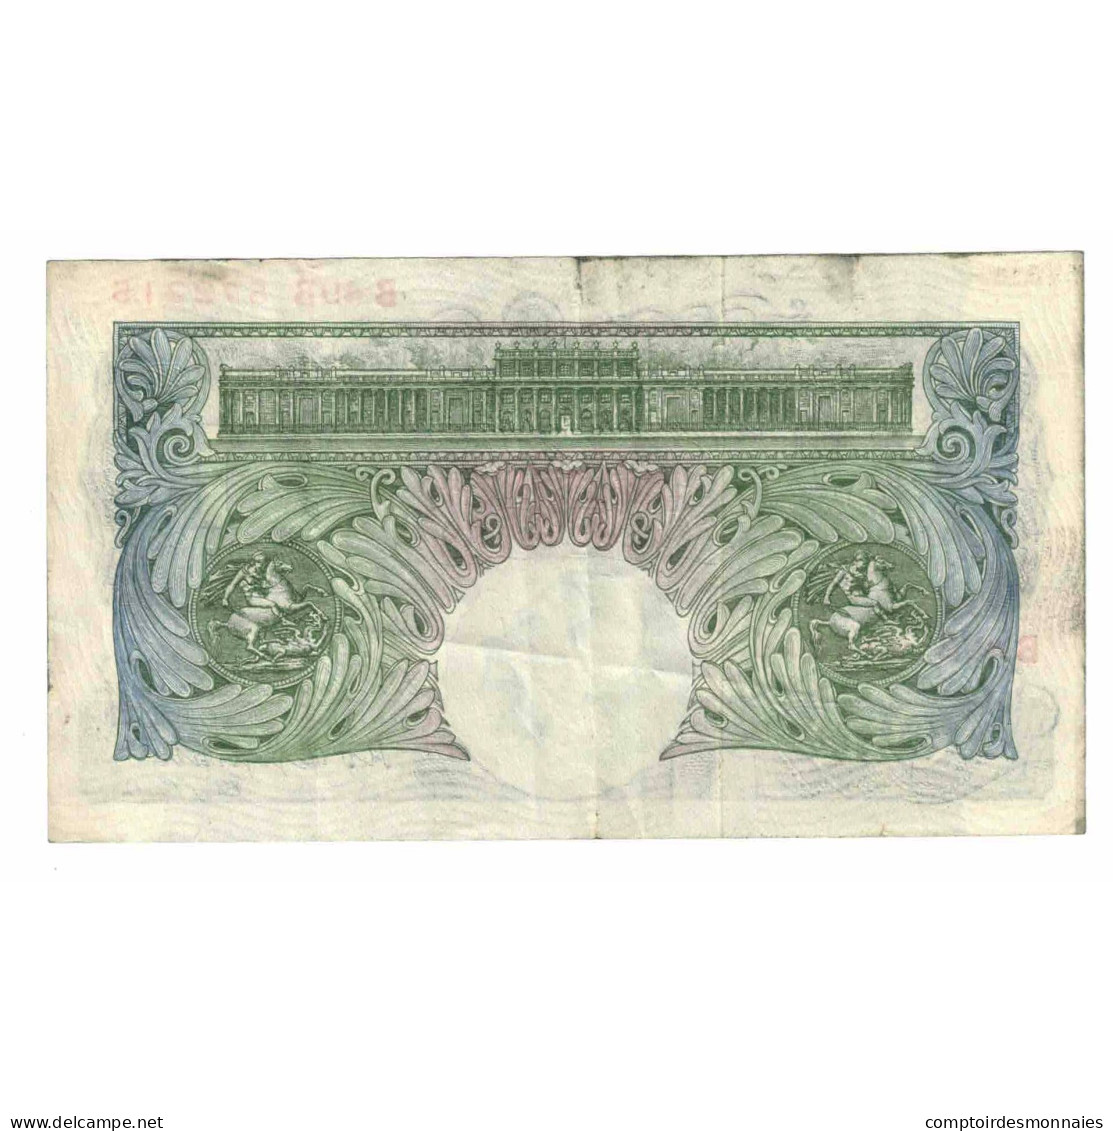 Billet, Grande-Bretagne, 1 Pound, 1934, KM:363c, TTB - 1 Pond